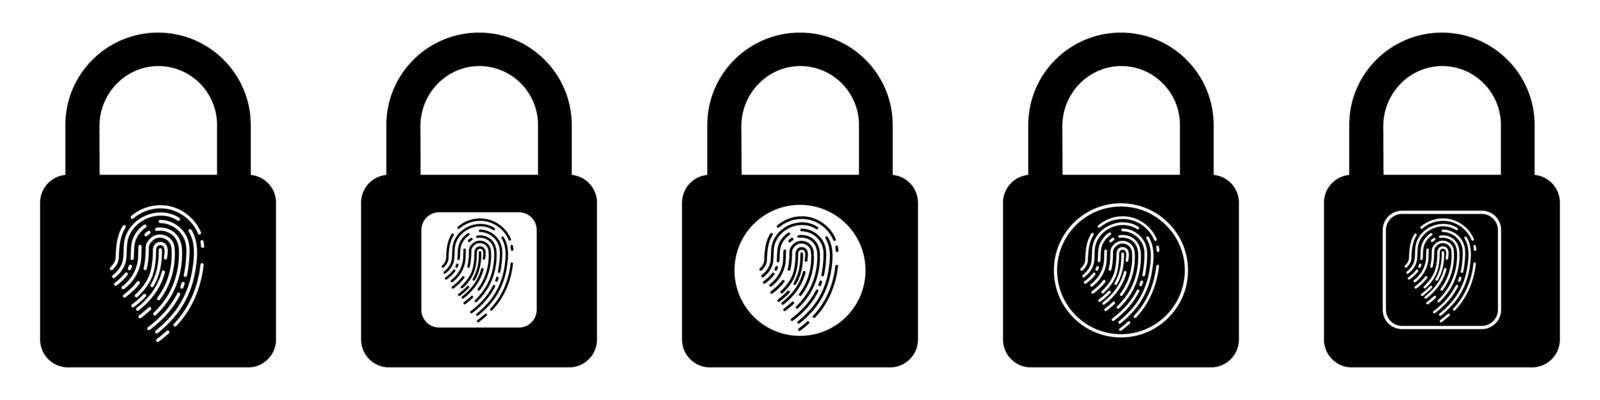 Fingerprint padlock icon. Scan fingerprint icon. Security concept icon. Vector illustration